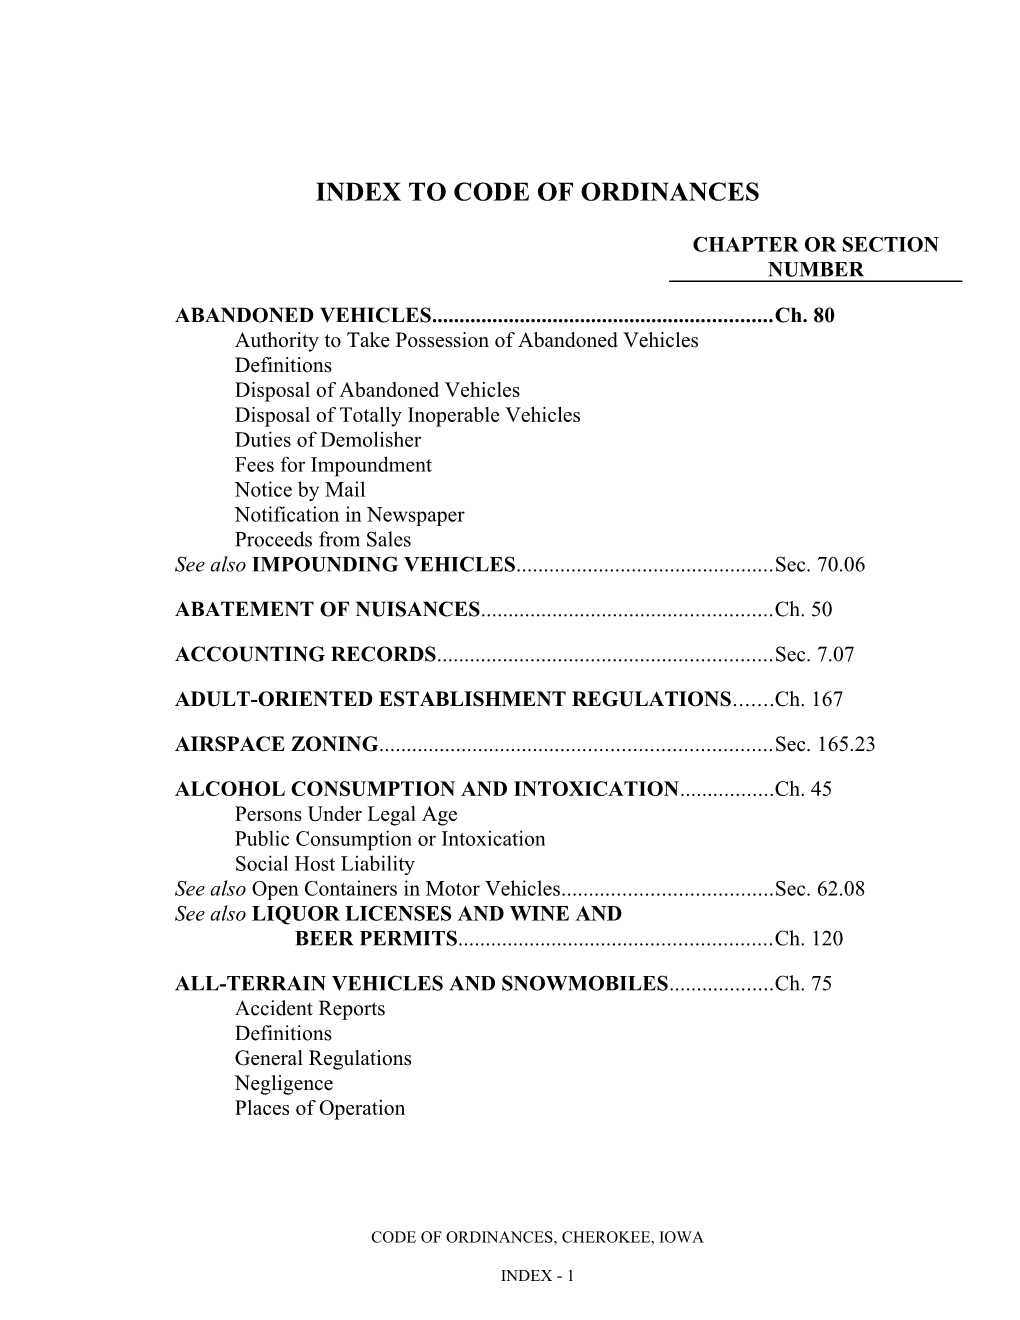 Index to Code of Ordinances